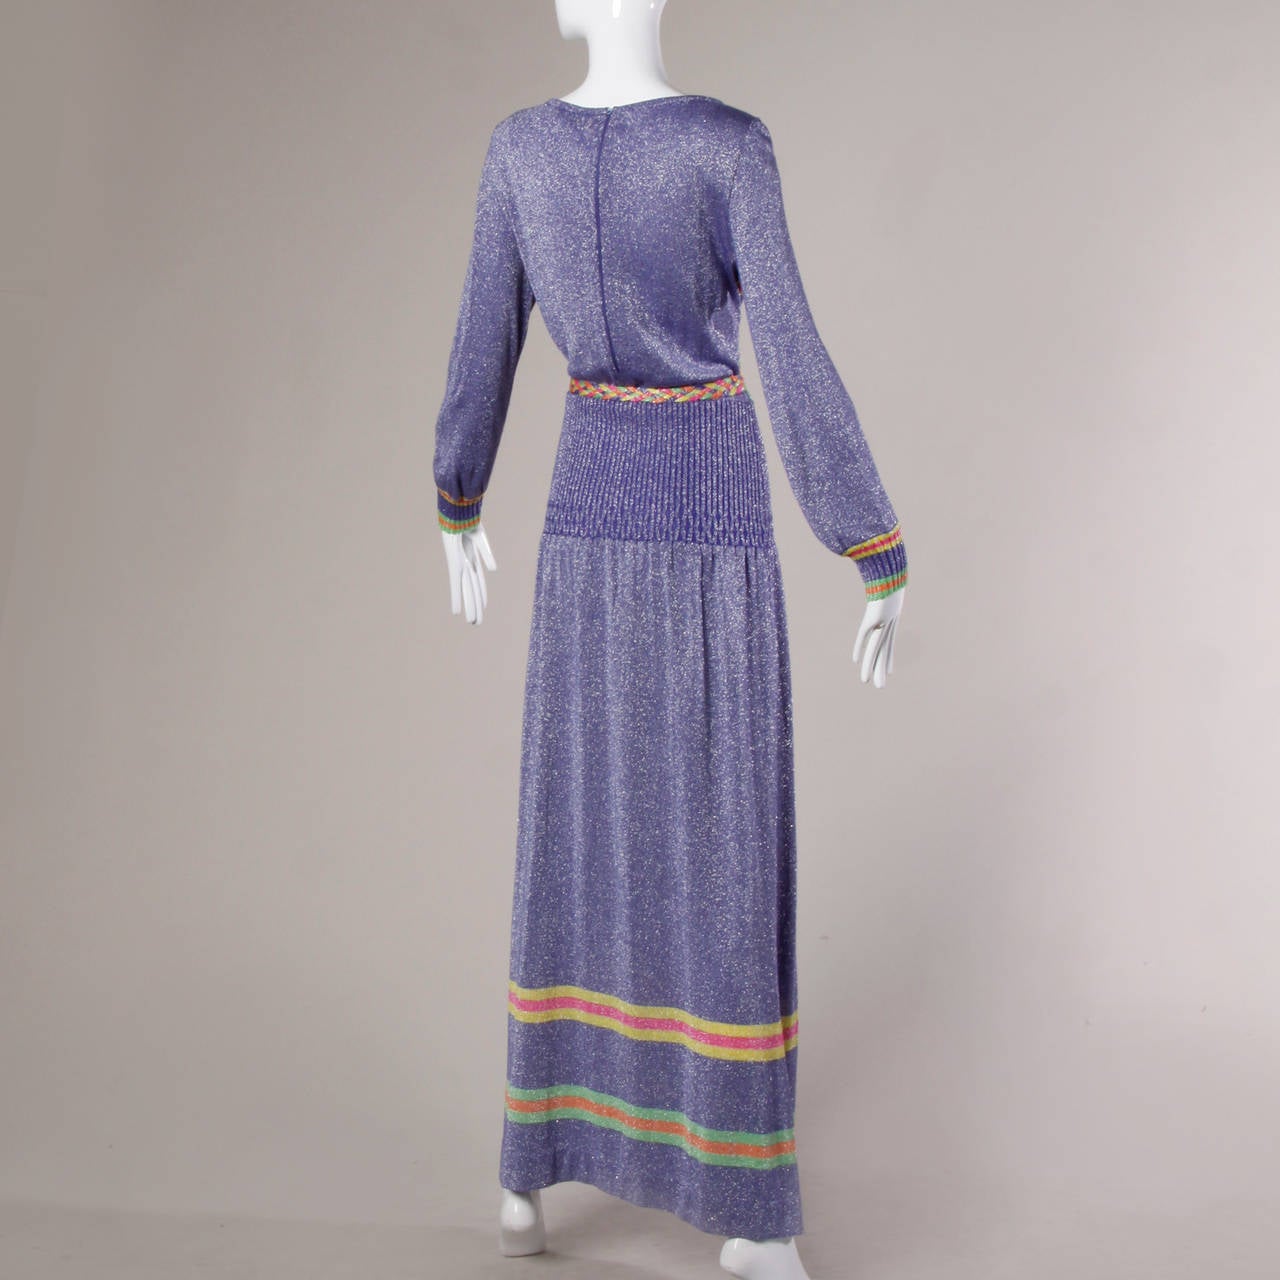 Gianni Ferri Vintage 1970s Purple Striped Metallic Knit Maxi Dress 3